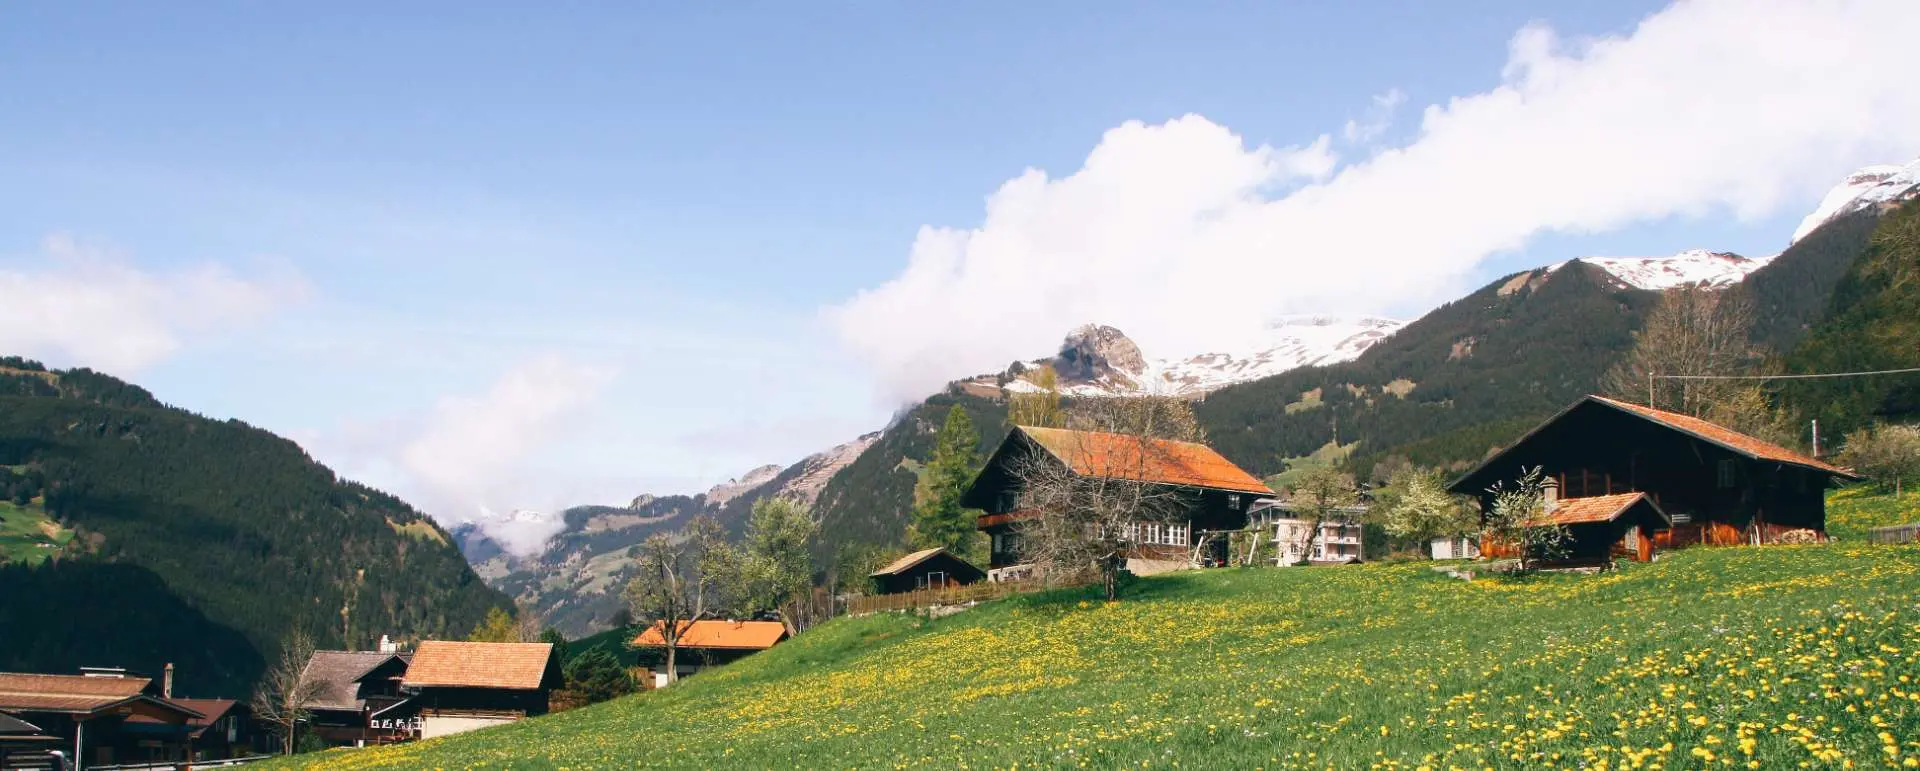 Bernese Highlands - the destination for groups